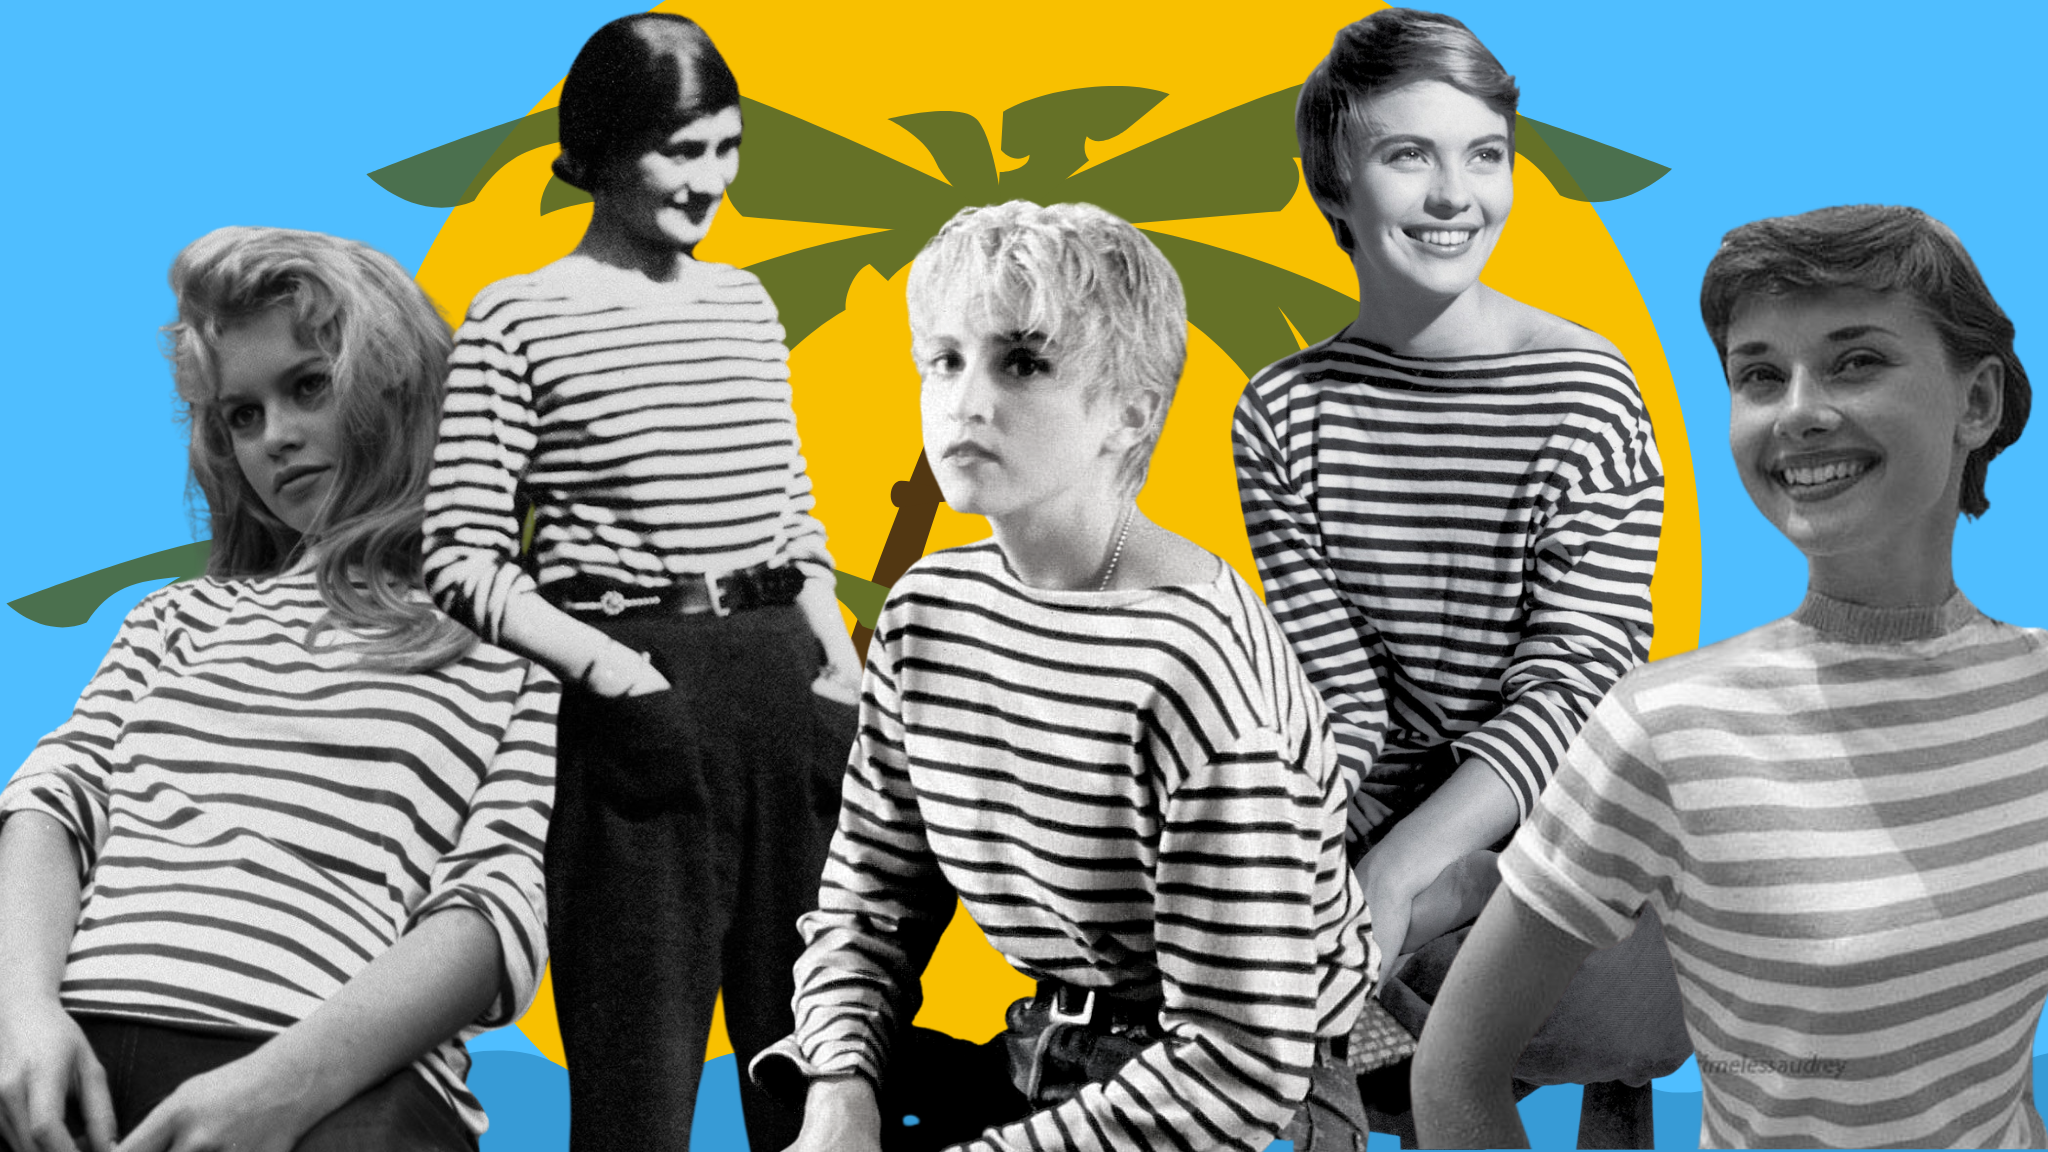 La historia de la camiseta de rayas marineras veraniega